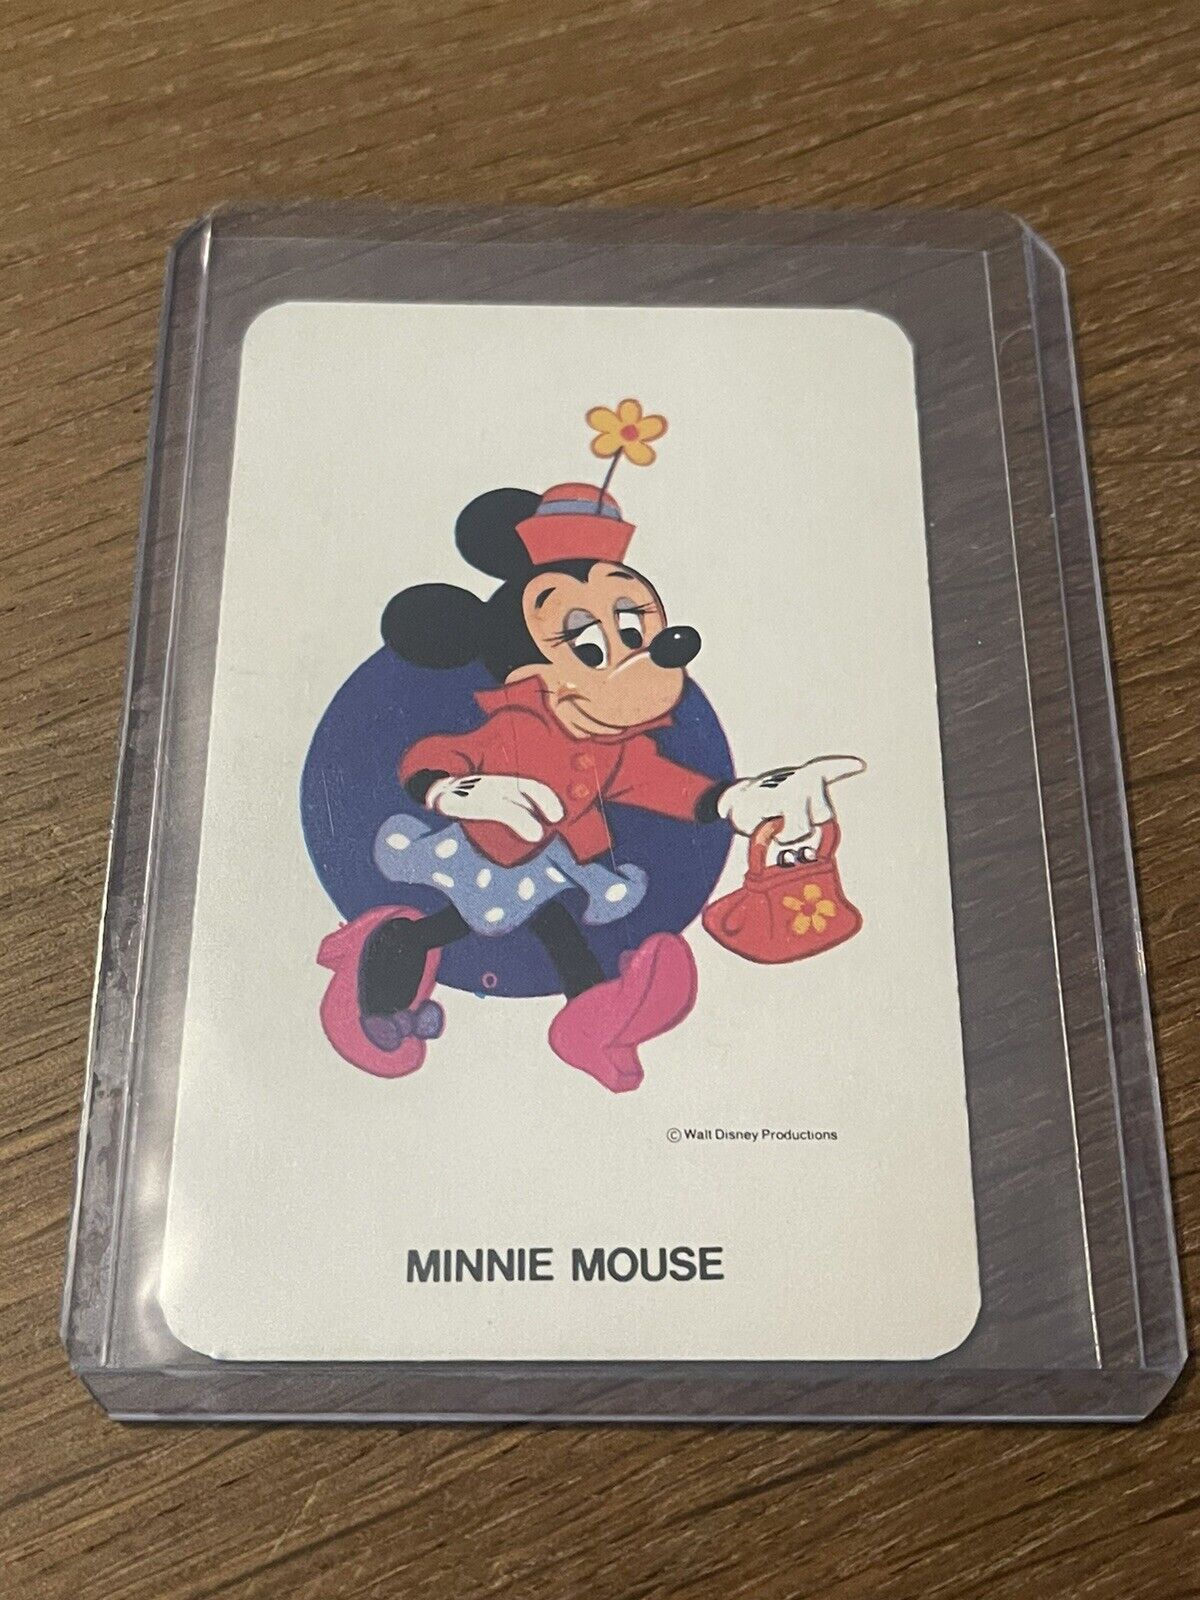 Authentic Vintage Walt Disney Productions Snap Minnie Mouse Card RARE DISNEYANA